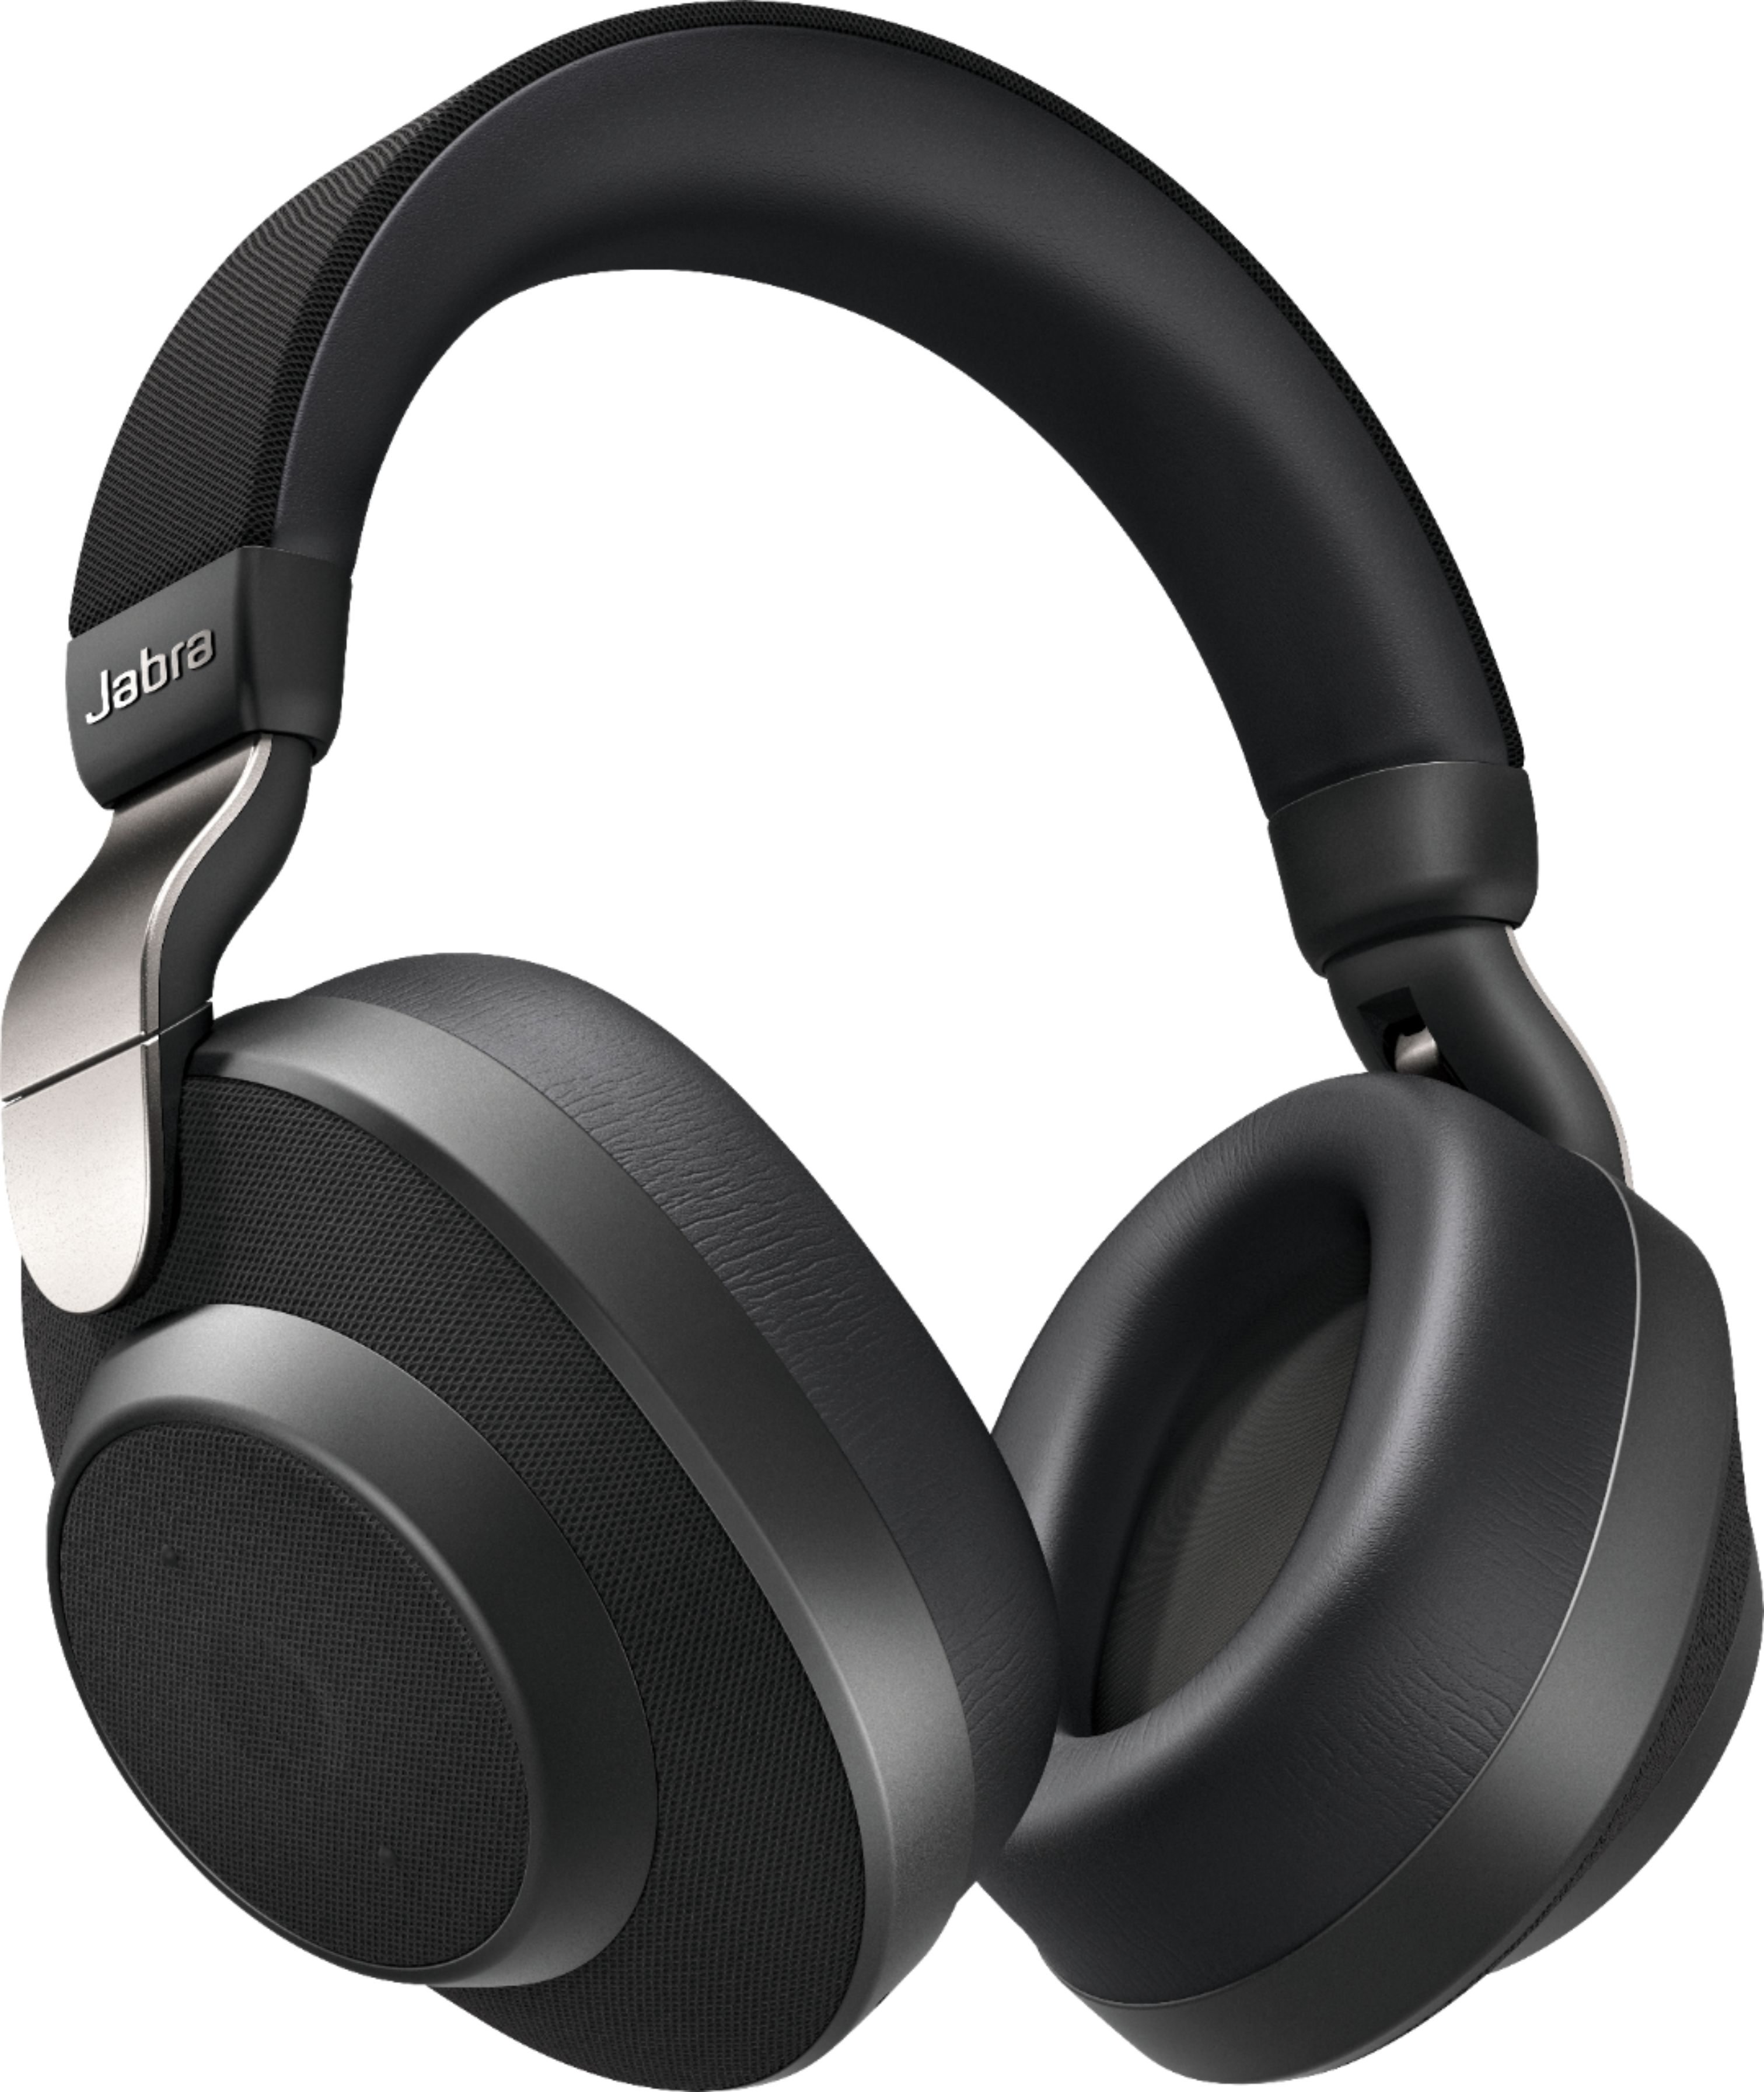 Jabra - Elite 85h Wireless Noise Cancelling Over-the-Ear Headphones - Titanium Black